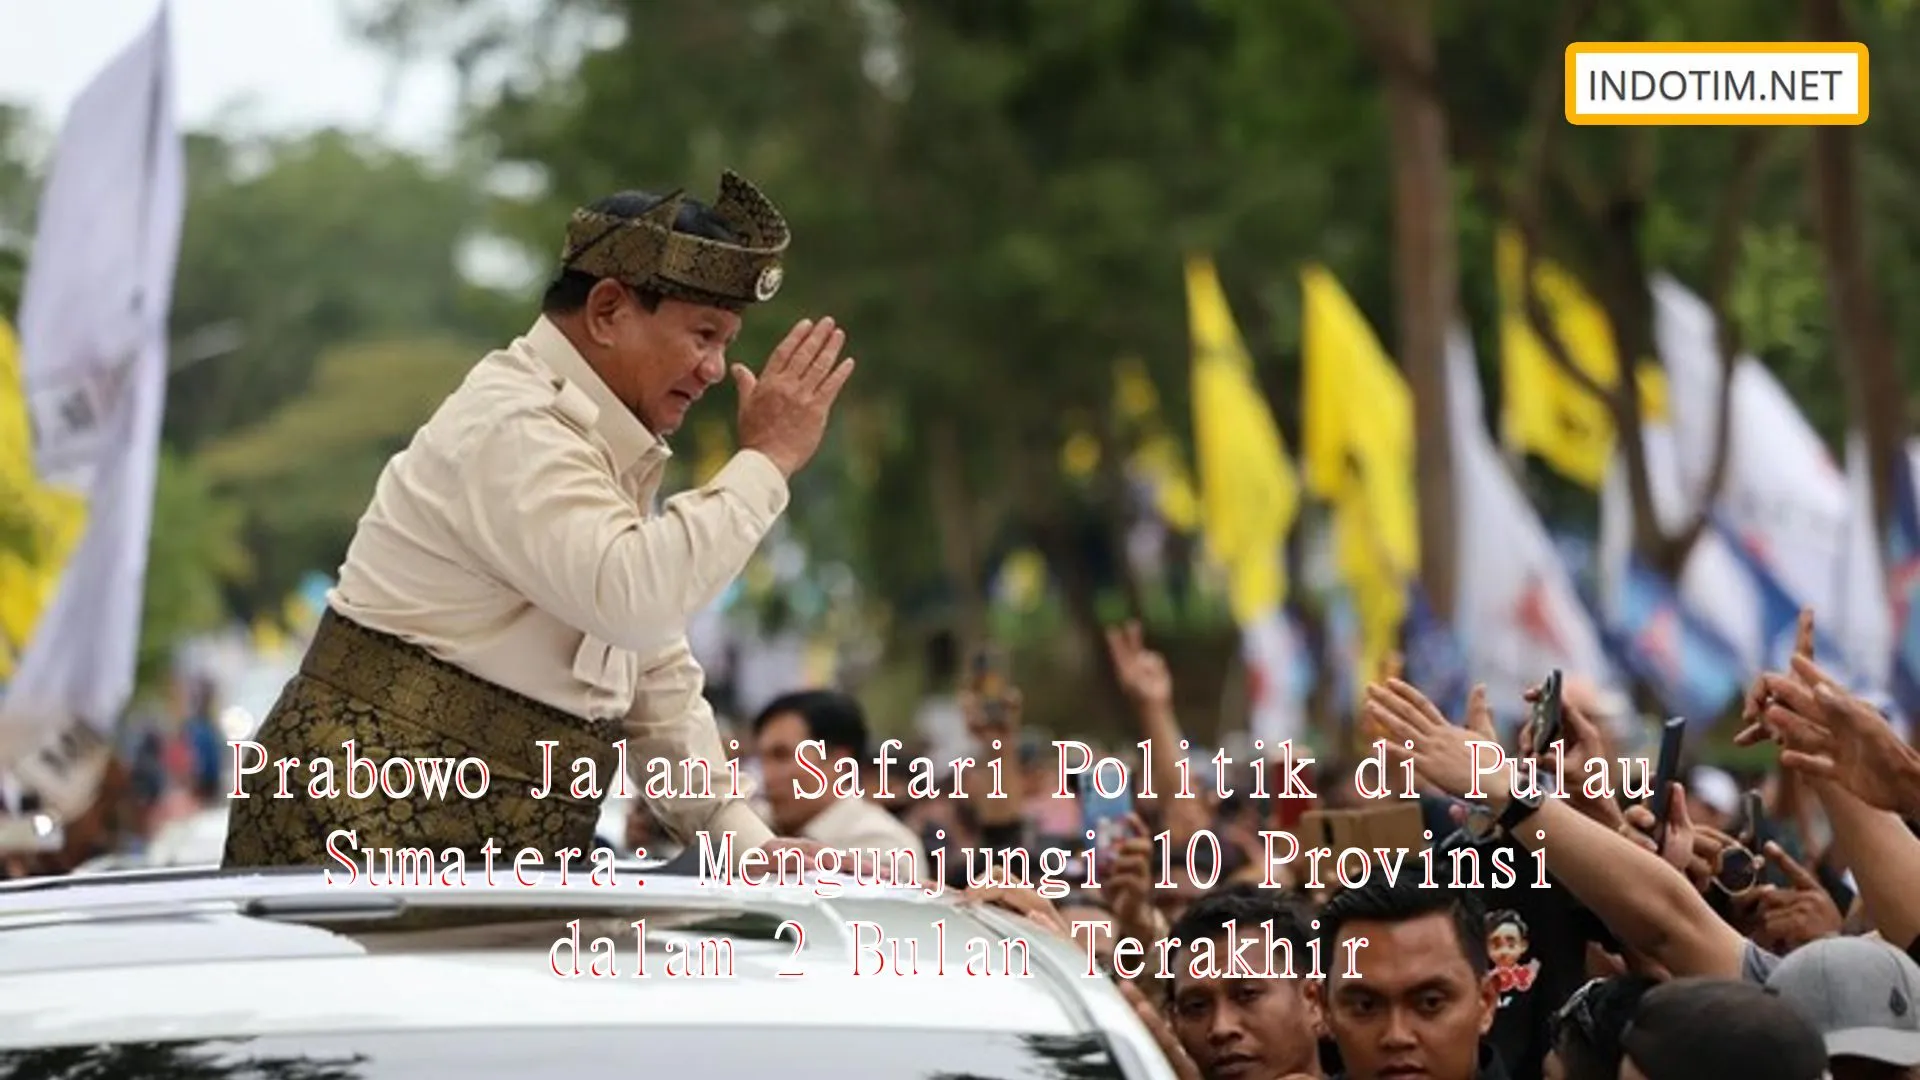 Prabowo Jalani Safari Politik di Pulau Sumatera: Mengunjungi 10 Provinsi dalam 2 Bulan Terakhir